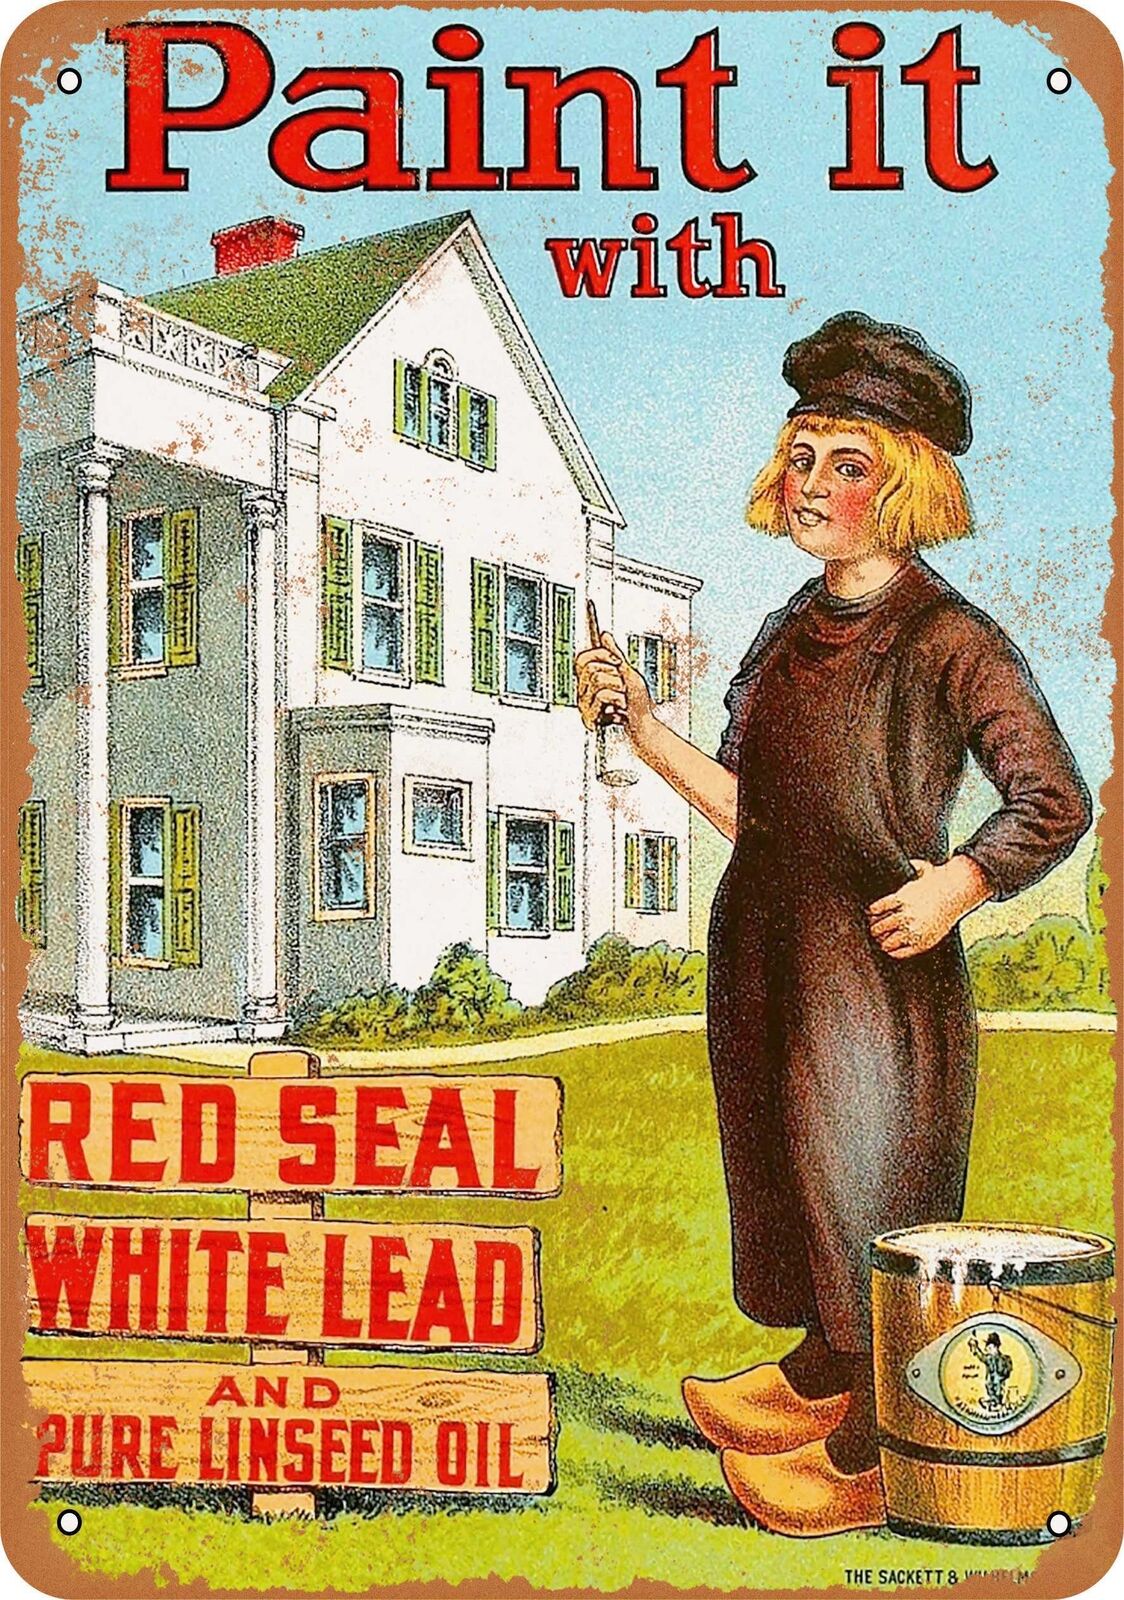 Metal Sign - 1940 Dutch Boy White Lead Paint - Vintage Look Reproduction